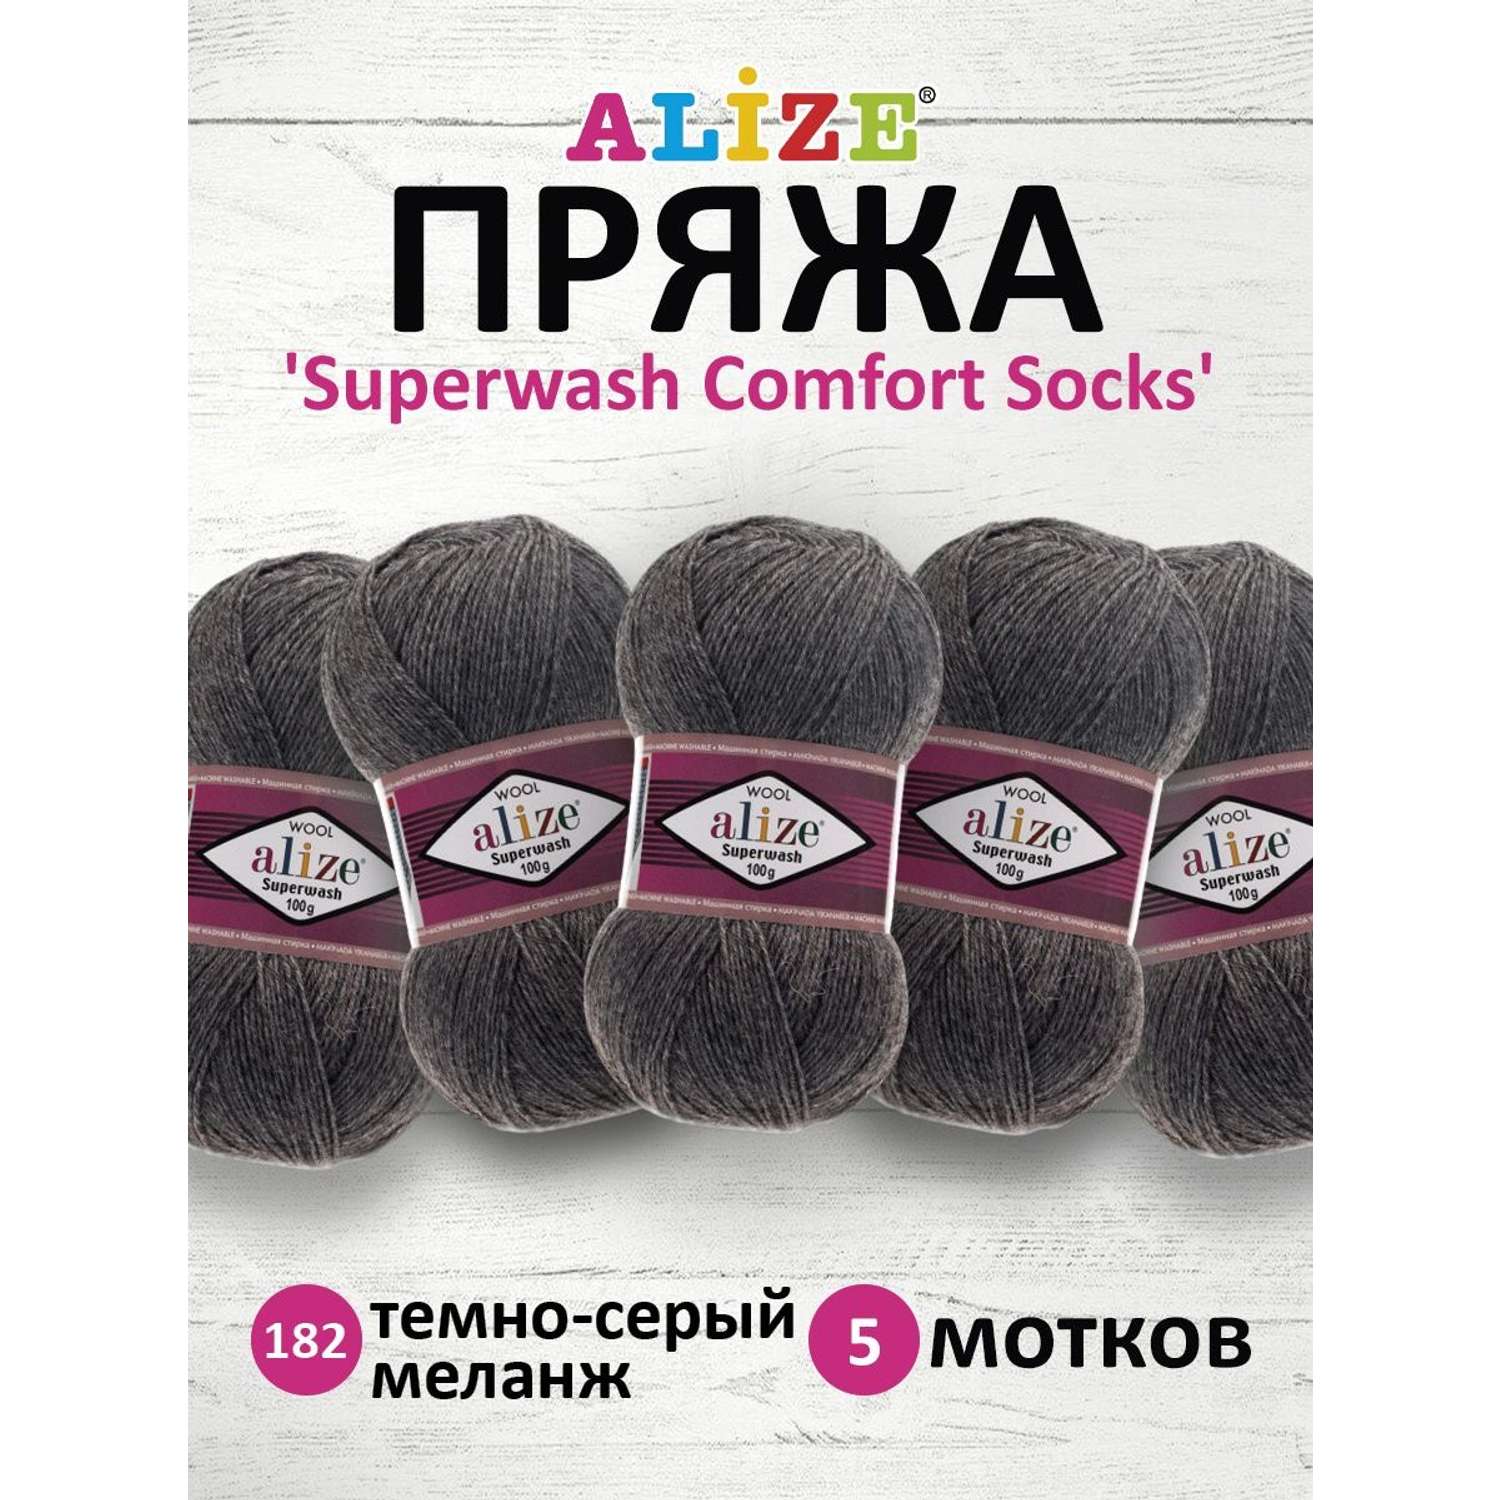 Пряжа Alize для вязания носков Superwash Comfort Socks 100 гр 420 м 5 мотков 182 темно-серый меланж - фото 1